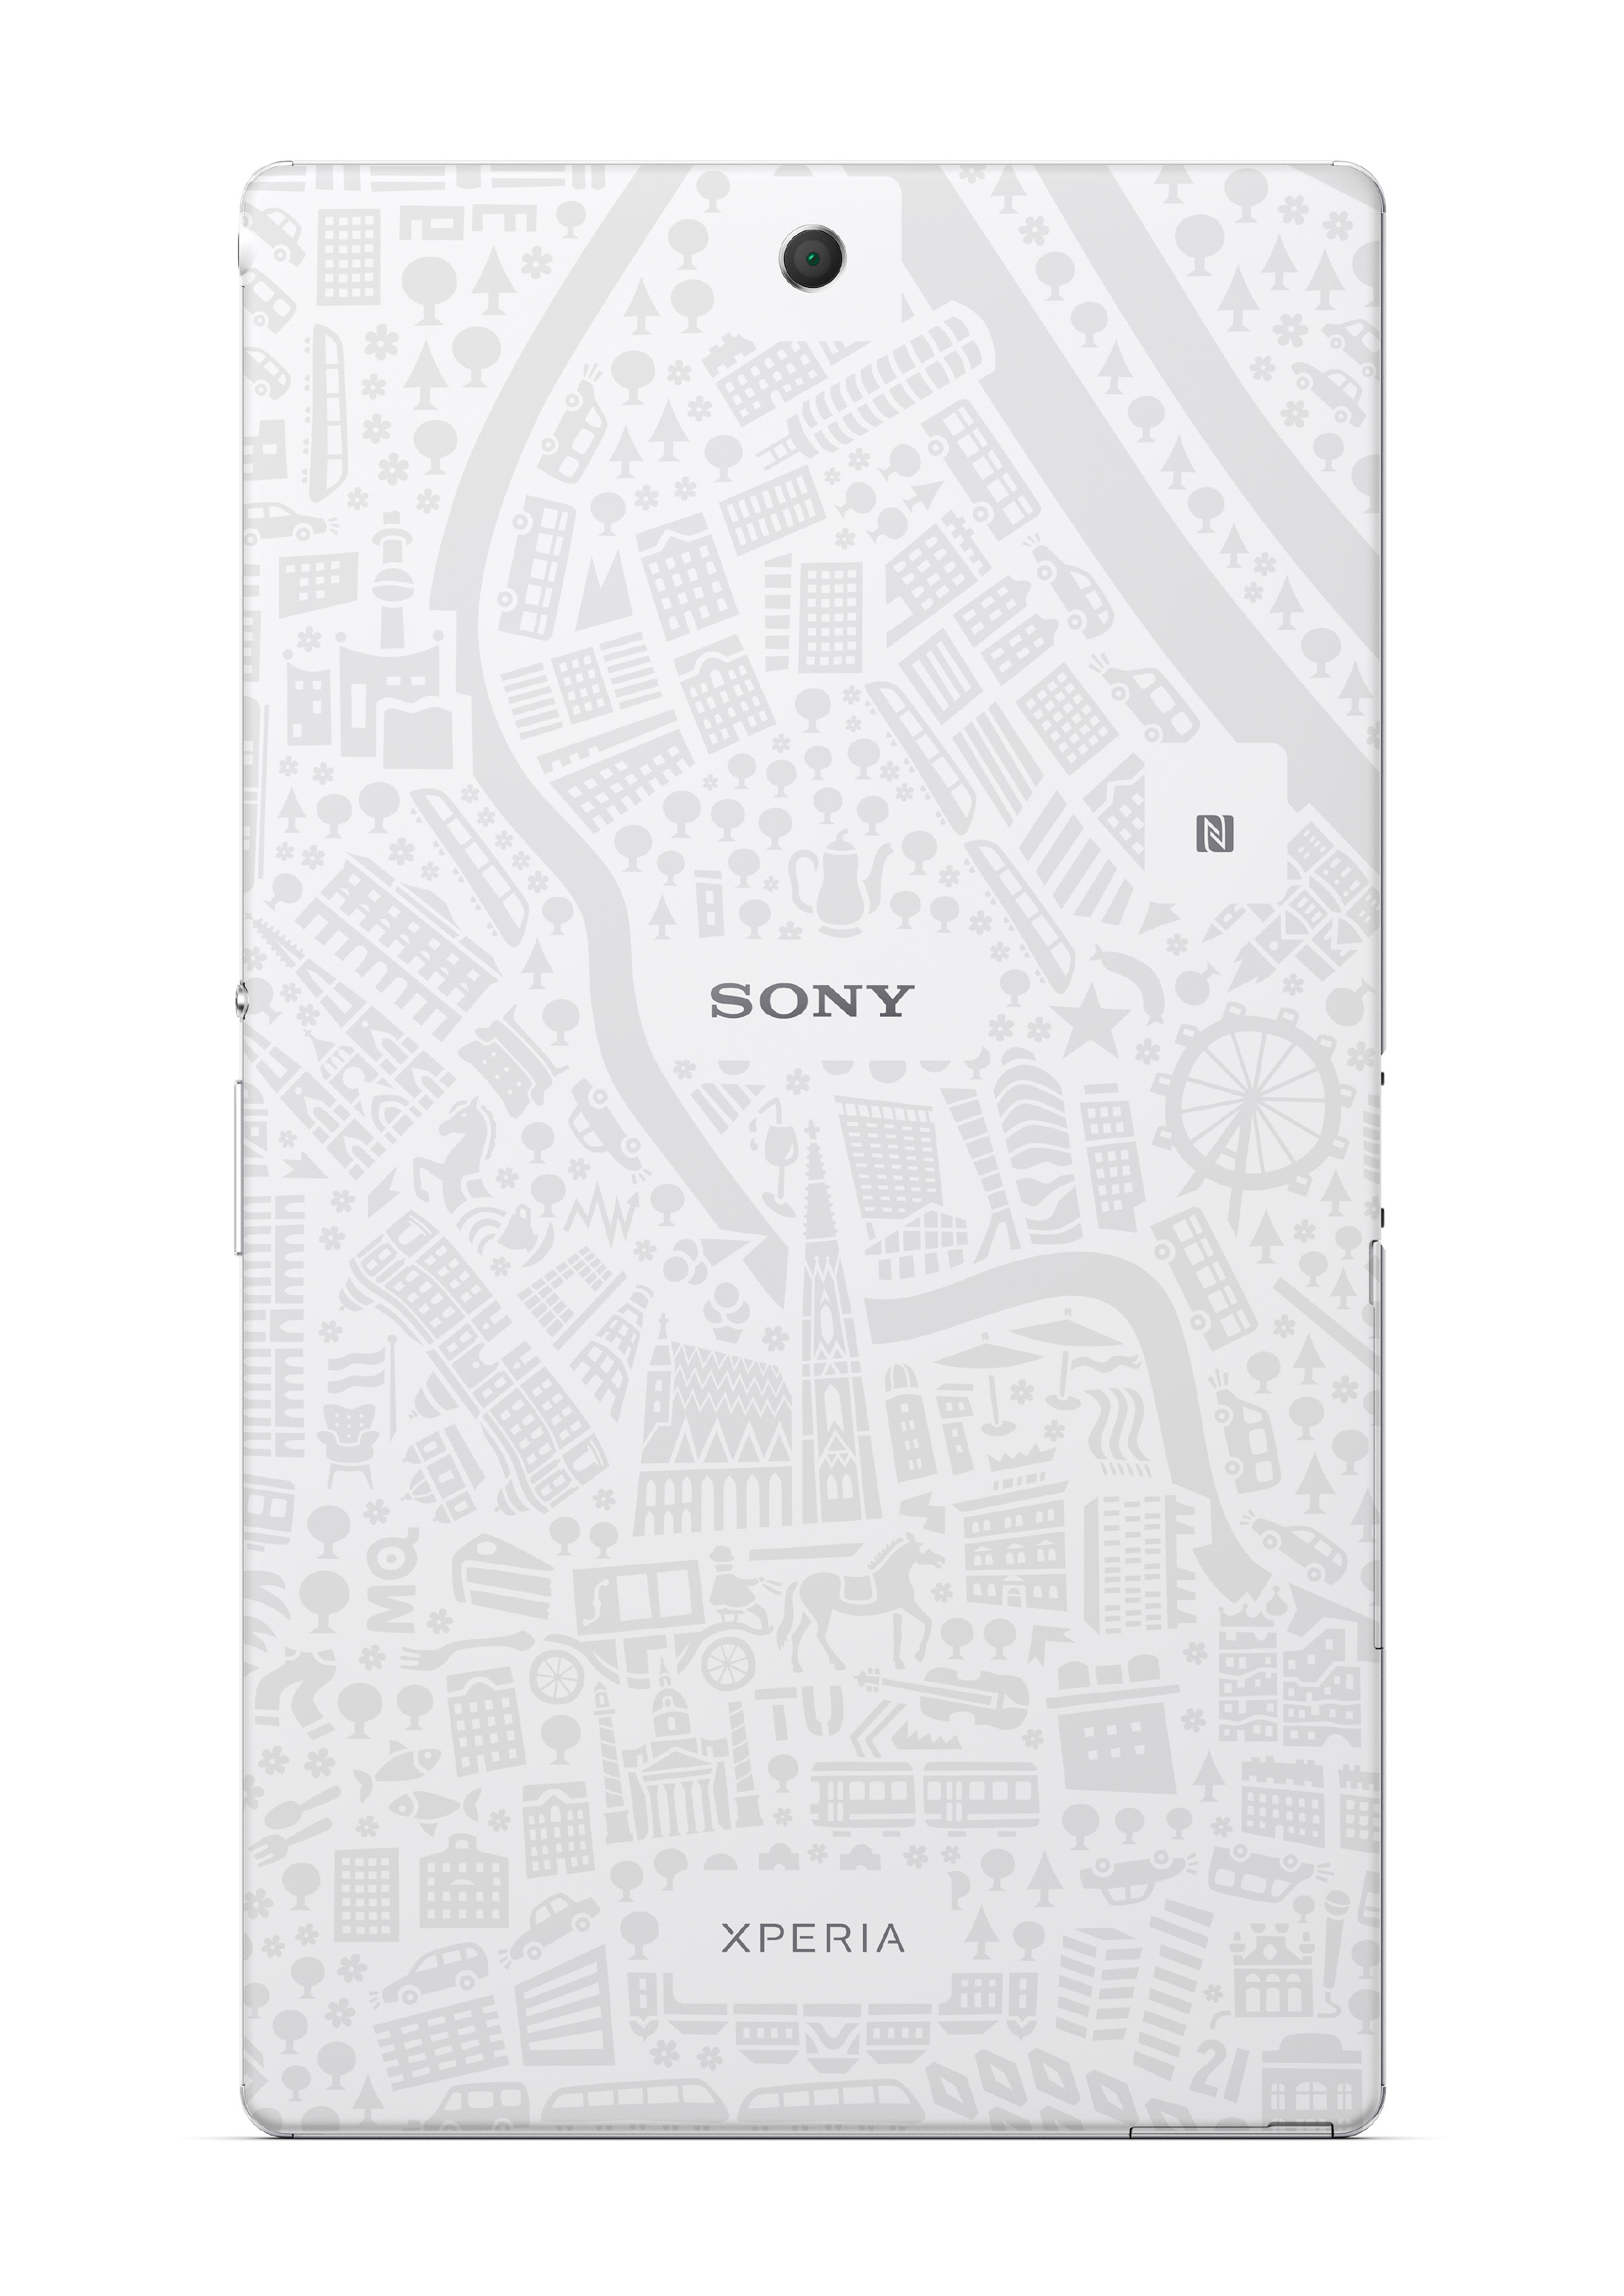 Sony Xperia Z3 Tablet Compact "StadtTalente Edition" - SmartTechNews